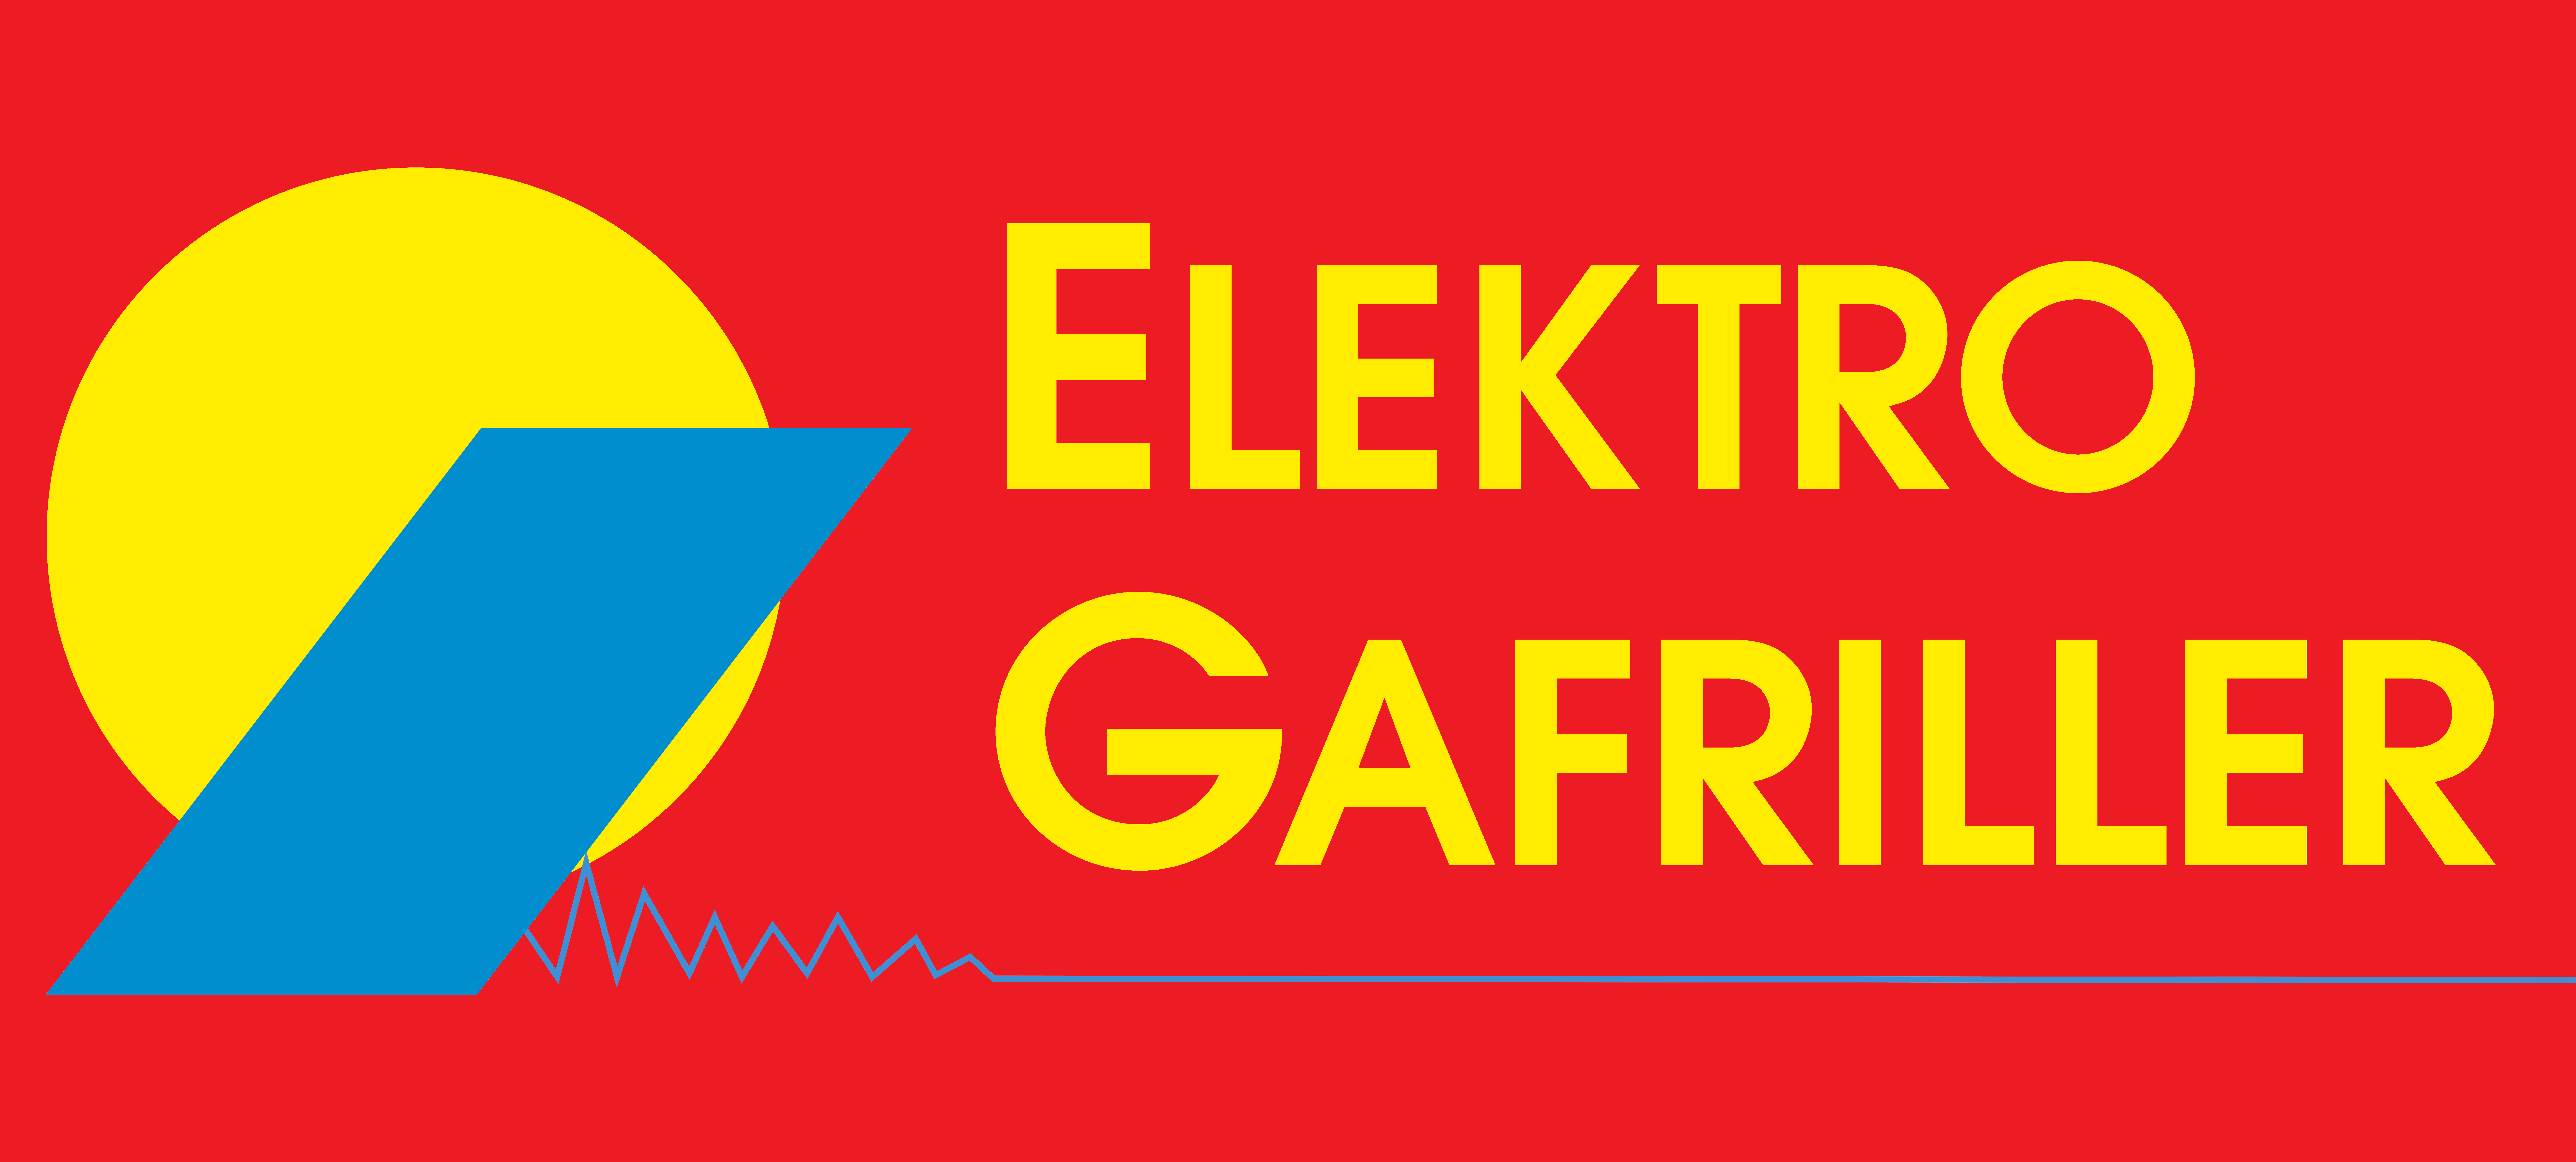 Elektro Gafriller